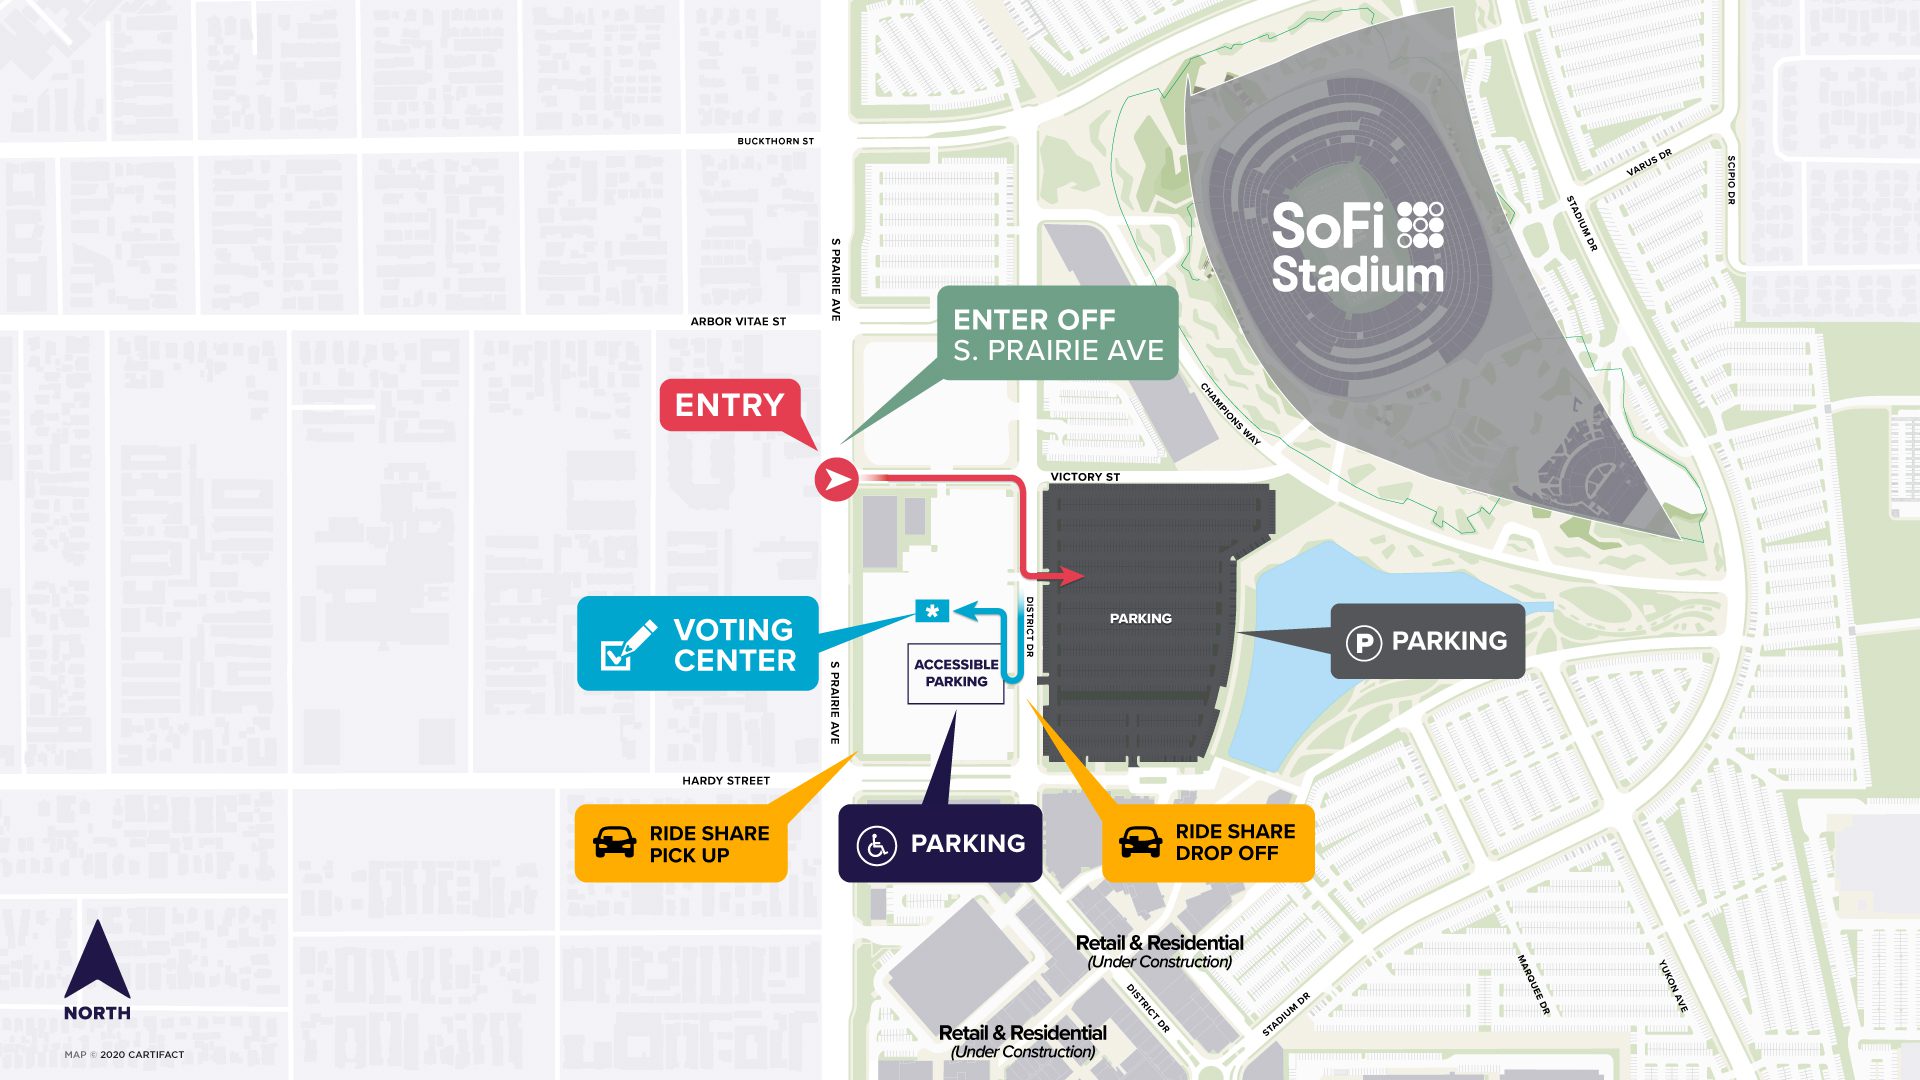 SoFi Stadium Parking Guide Cost, Map, and MoneySaving Tips